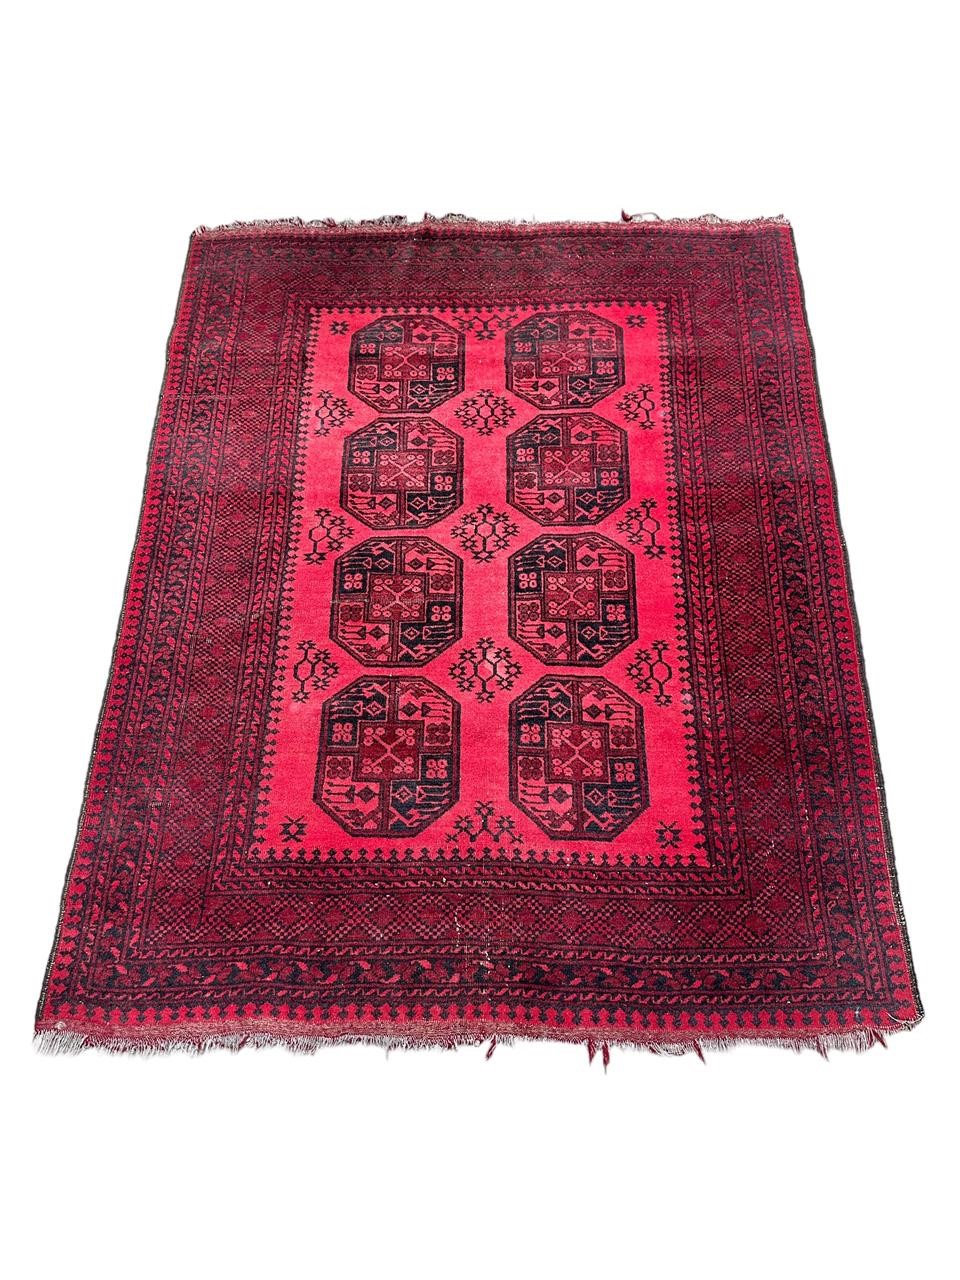 Antique Hand Woven Afgan Rug